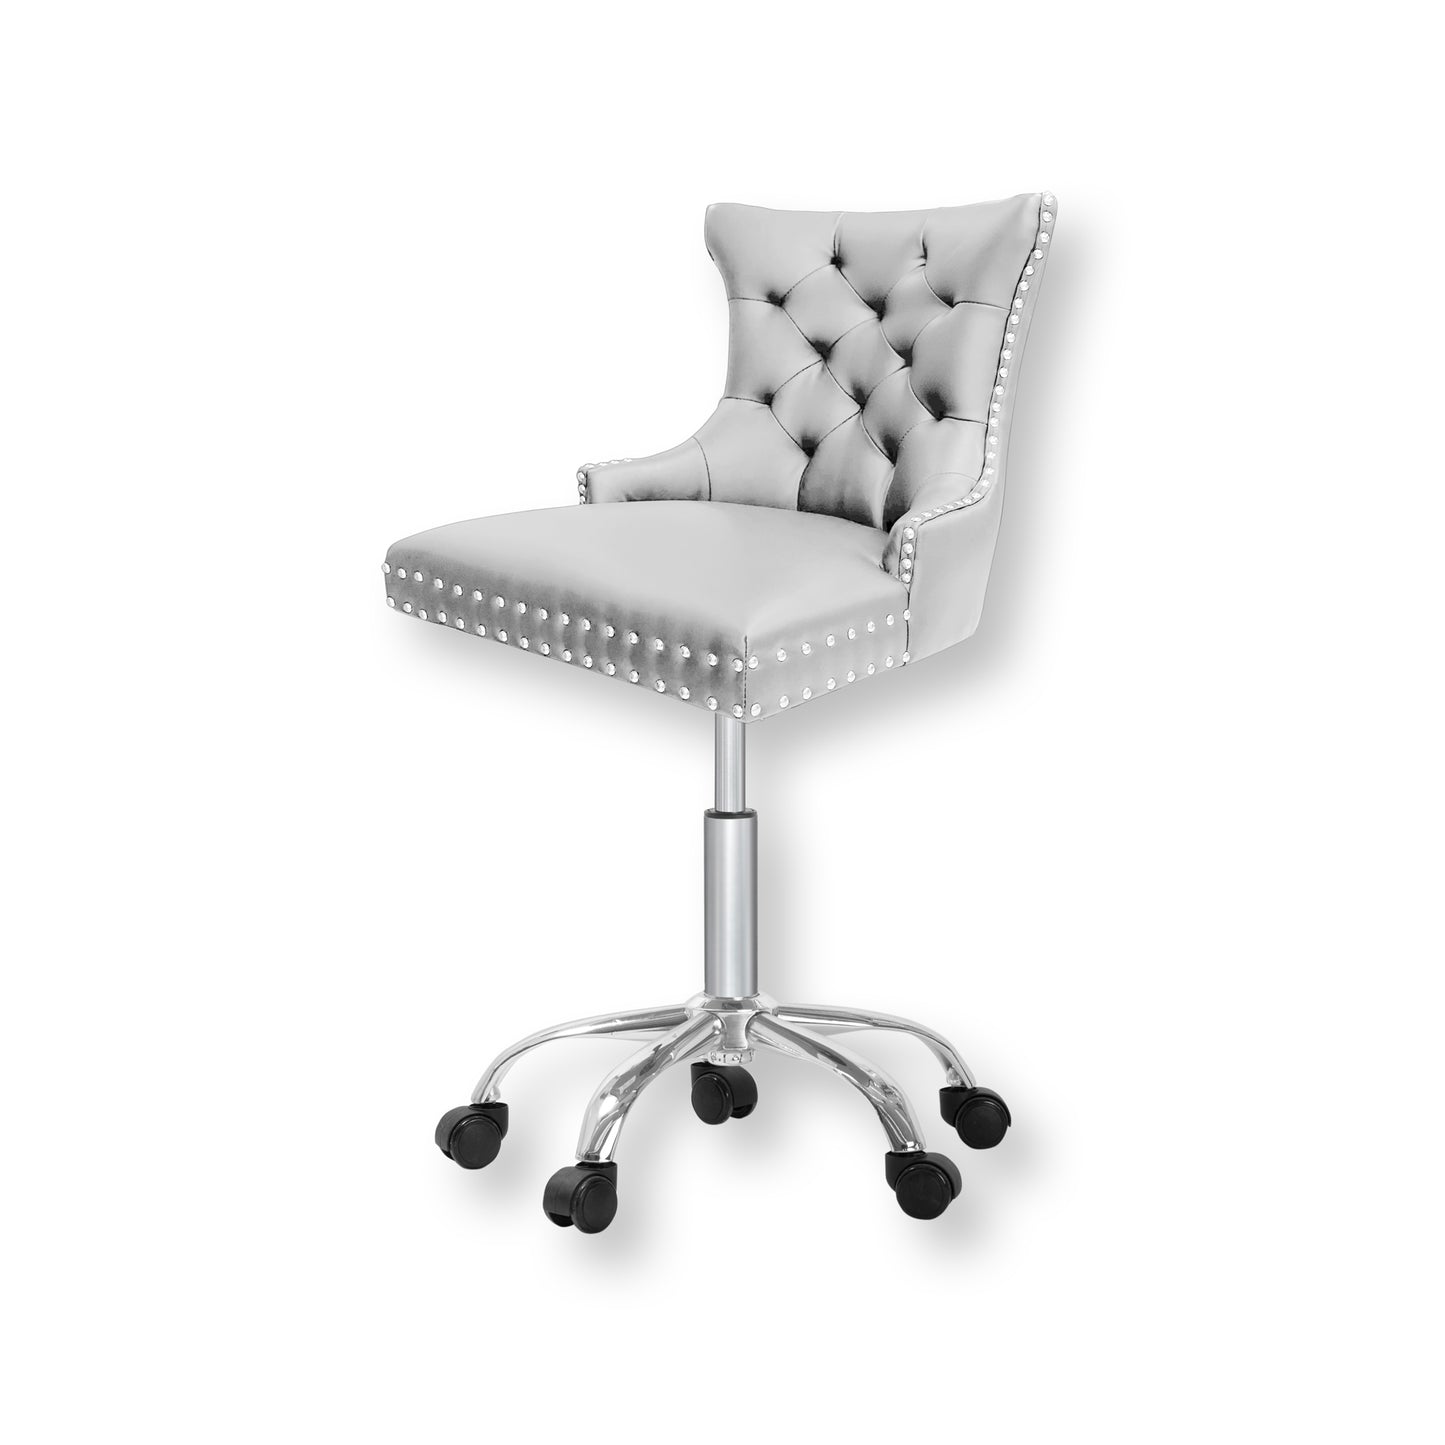 LIght Grey Color Itech Luxury Venice Customer Chair